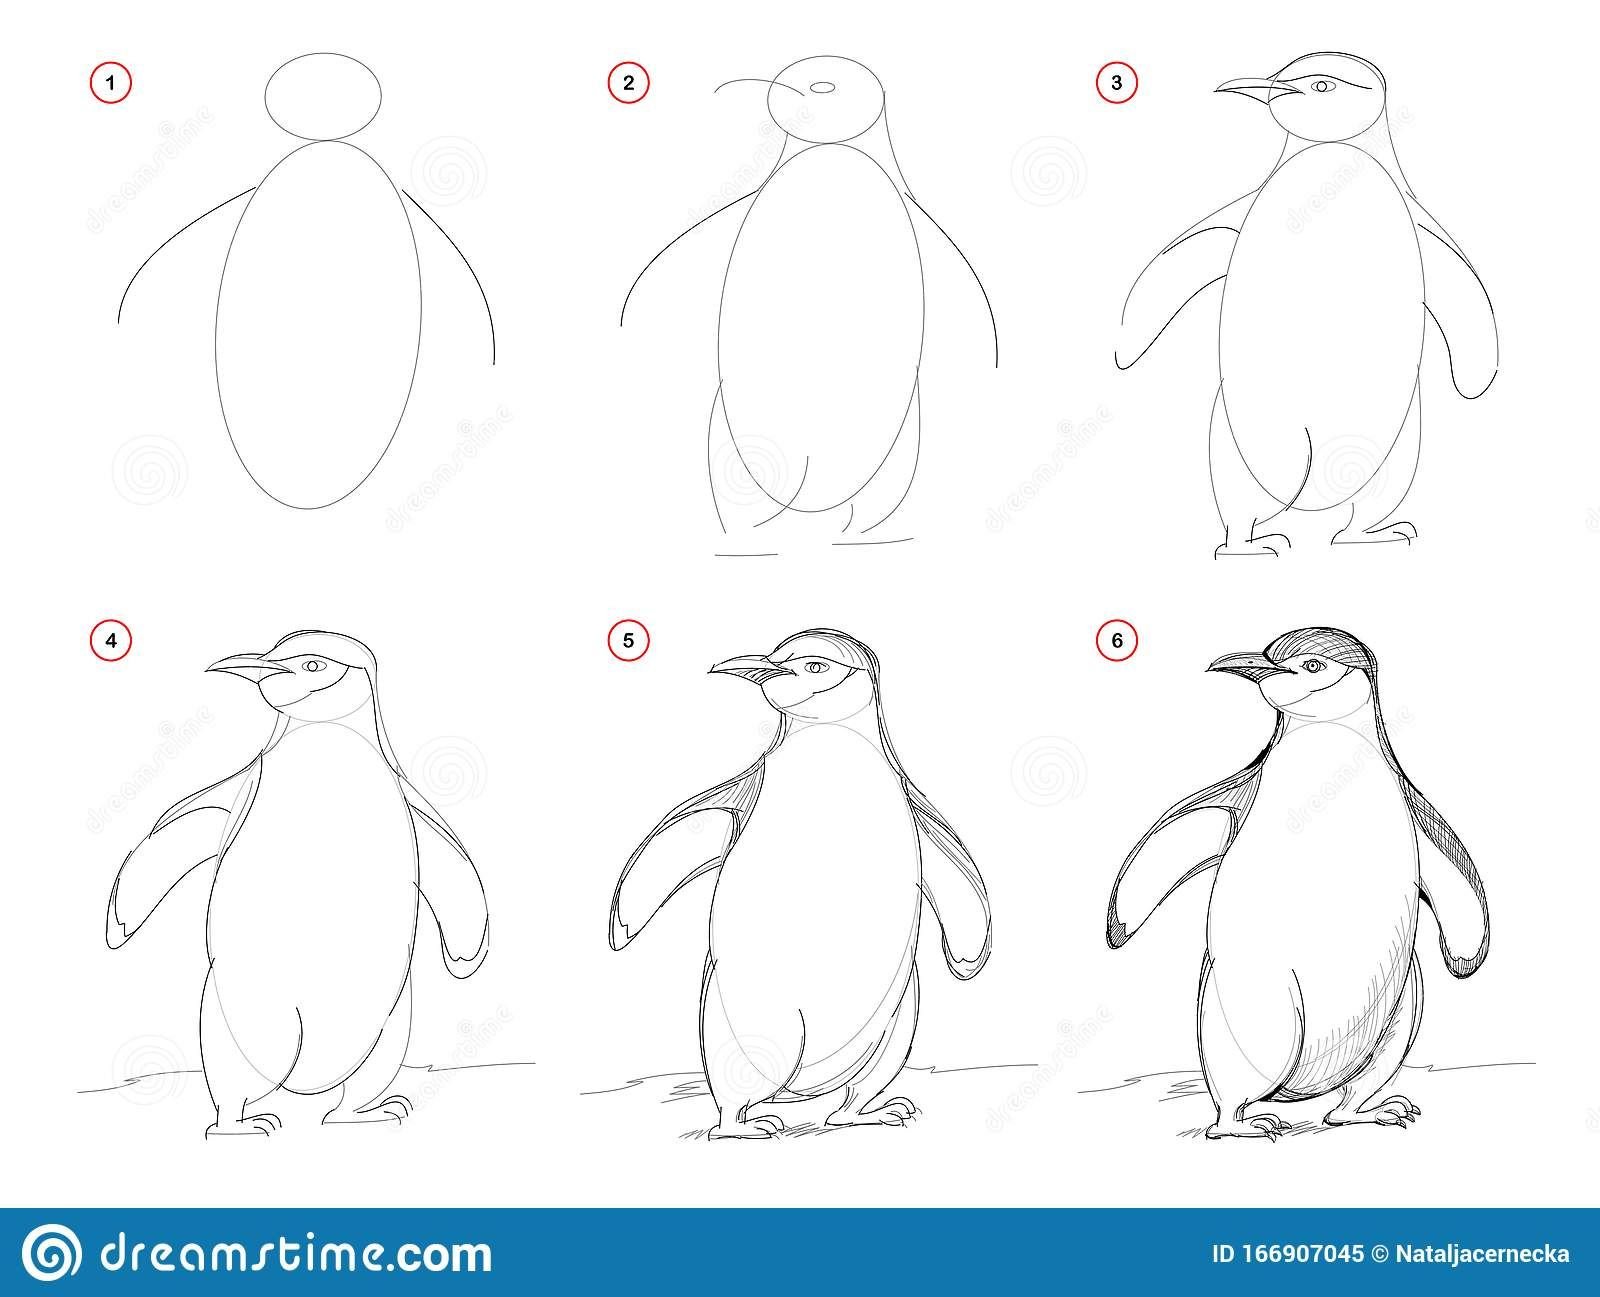 Пингвин рисунок поэтапно